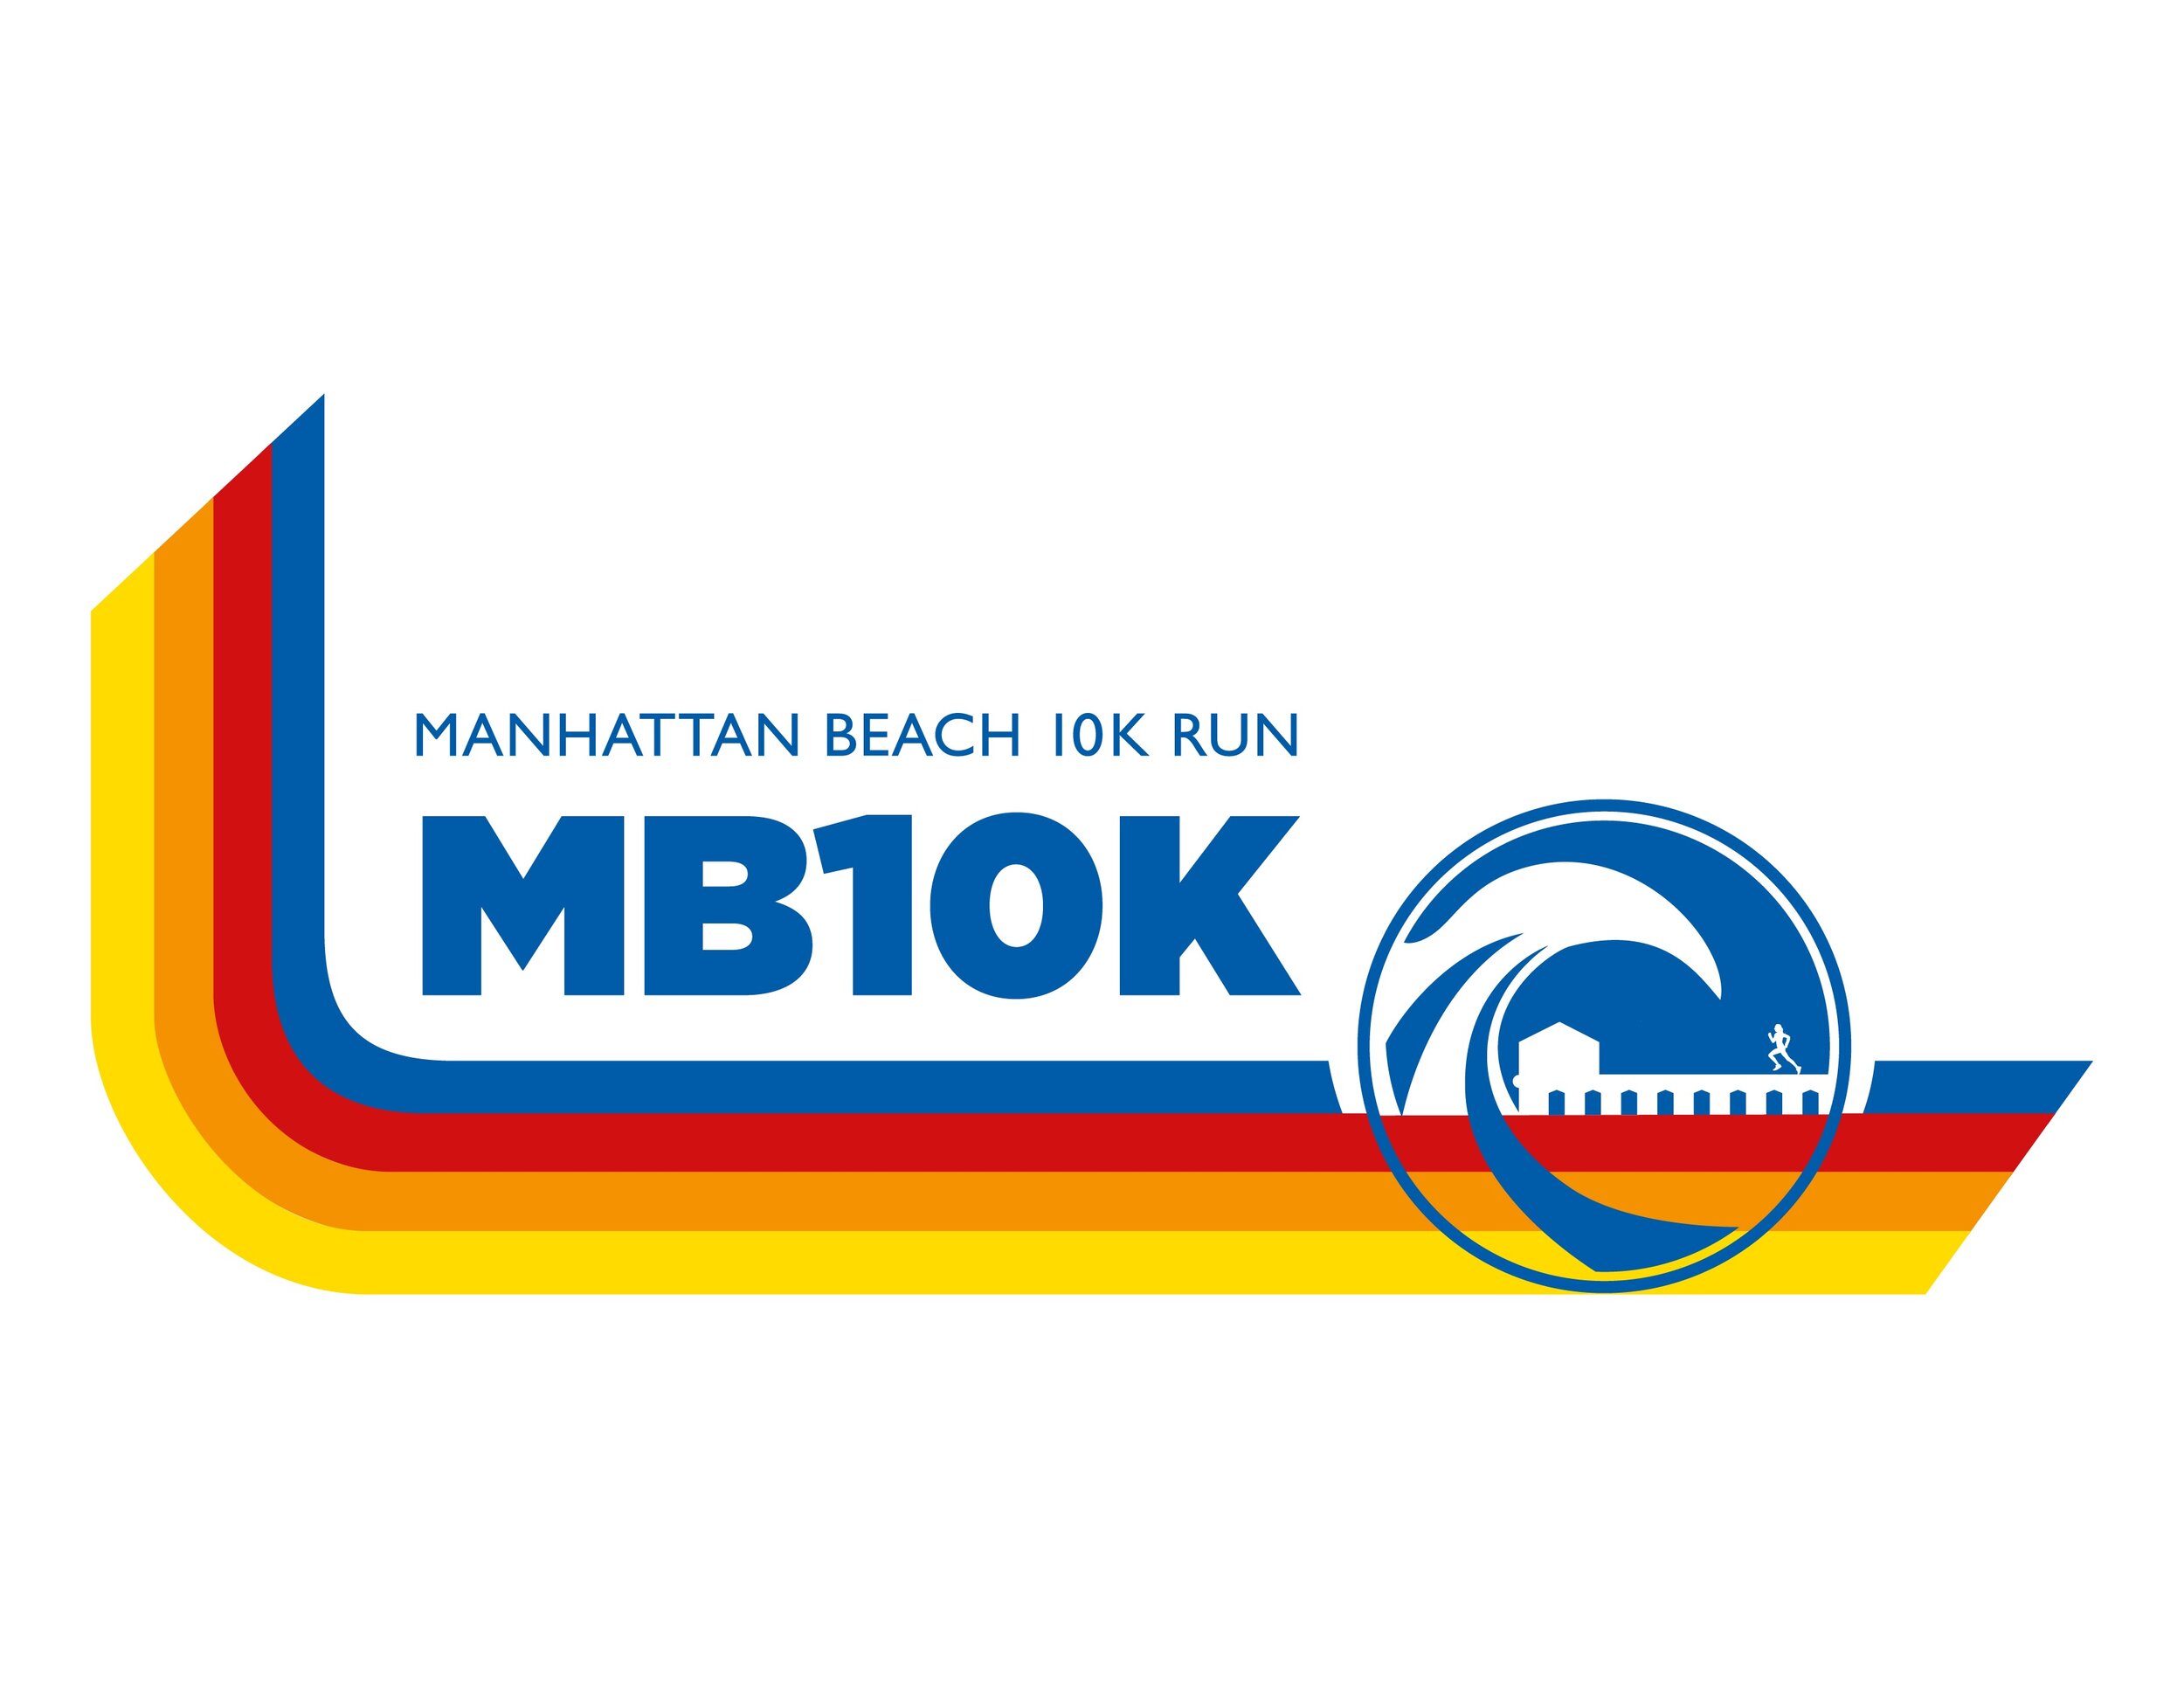 MB10k-2020-Logo-final-2-01-squashed.jpg